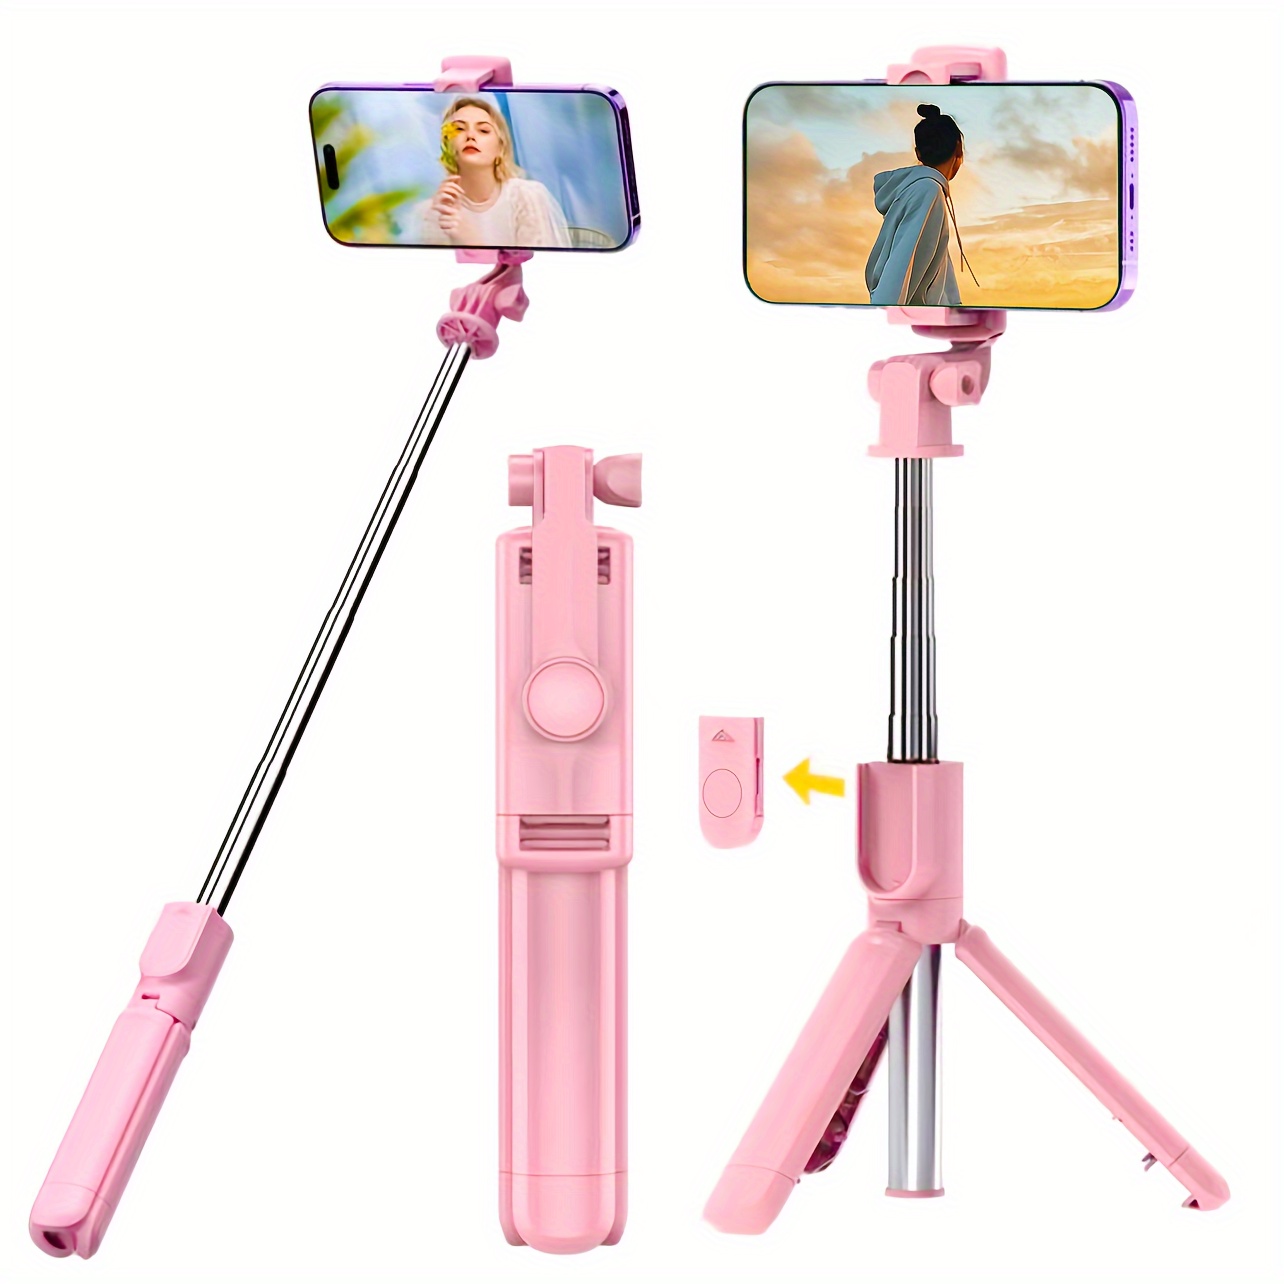 Trípode para palo selfie con luz de relleno, trípode extensible